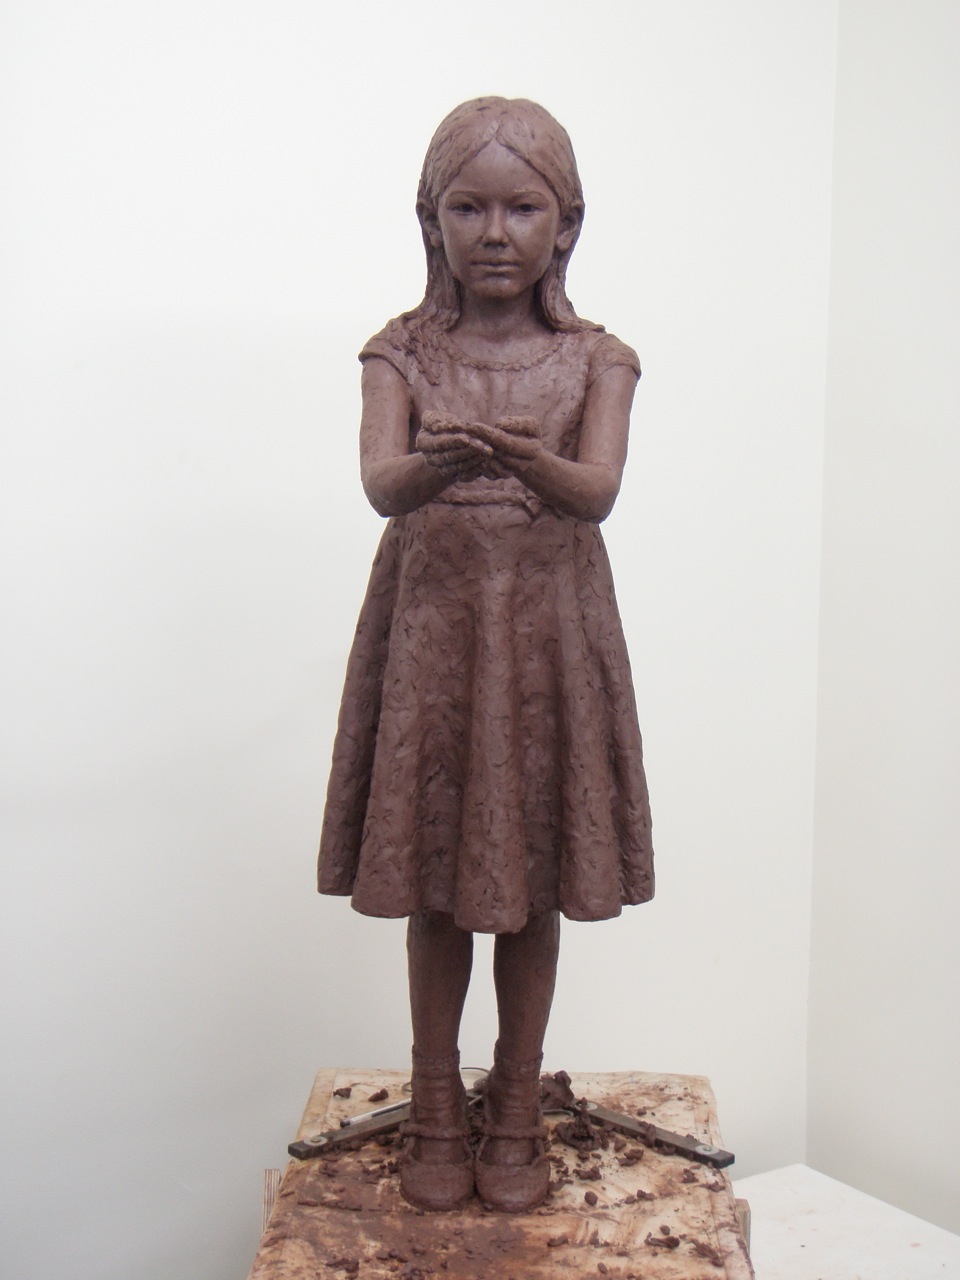 Final clay sculpture of Sadako